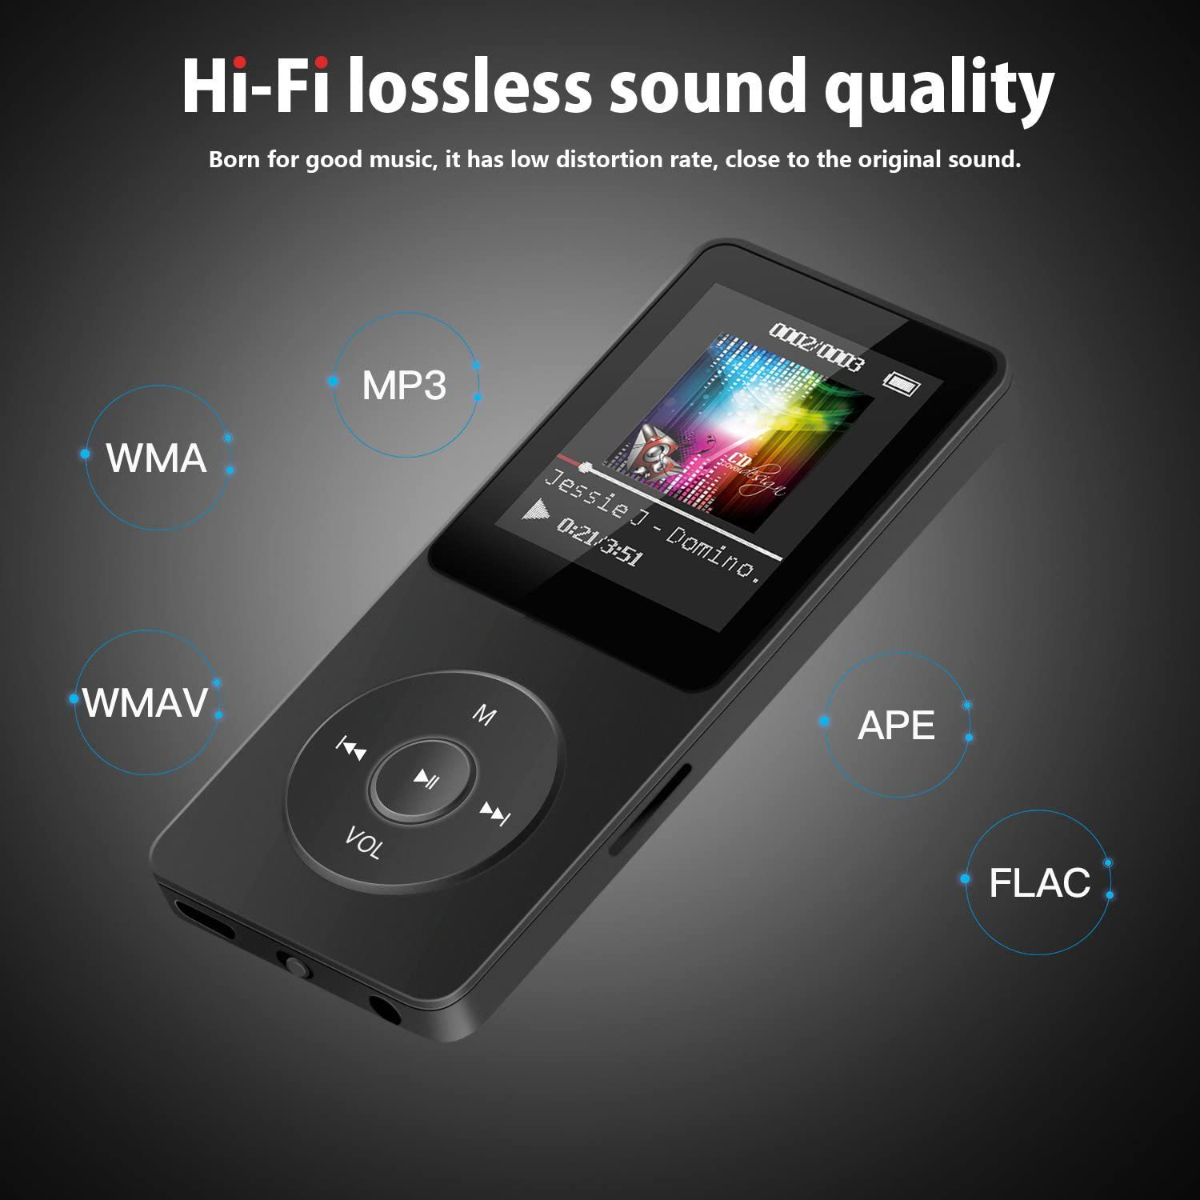 (64 Player schwarz) Ebook Player MP3 Walkman SYNTEK Walkman MP3/MP4 Bluetooth GB, Musikspieler Edition Student